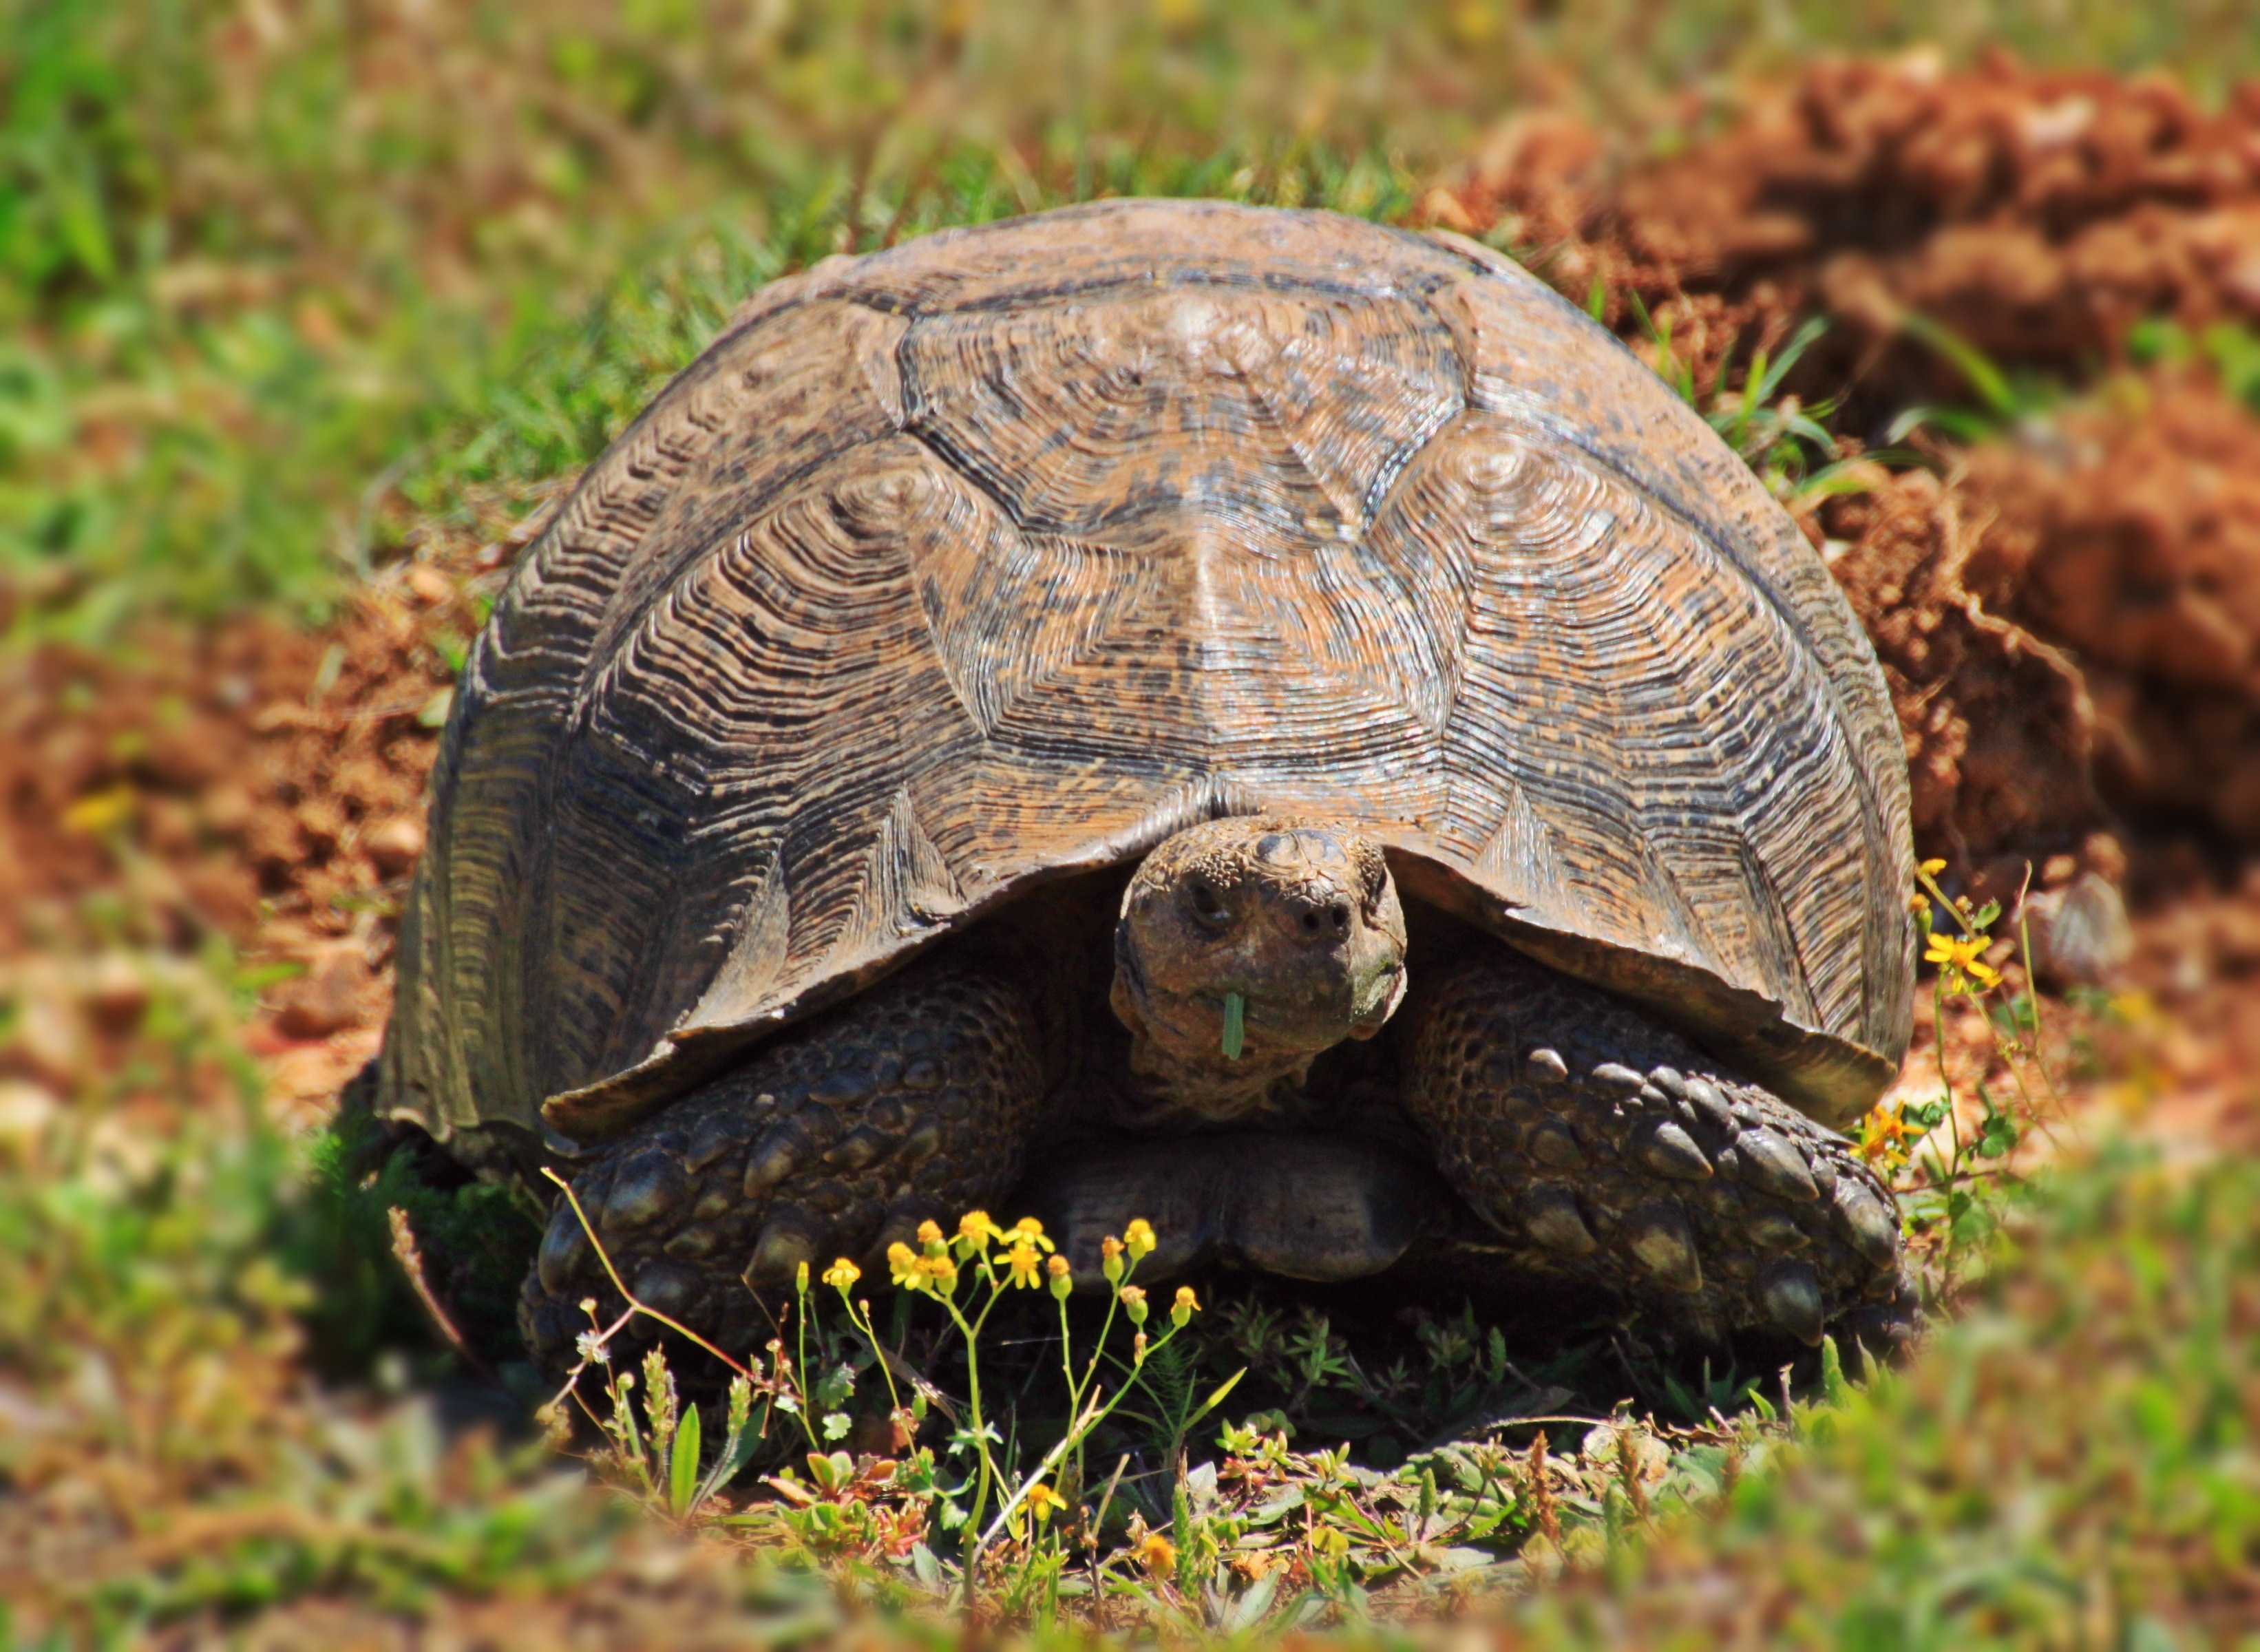 brown tortoise on grass field